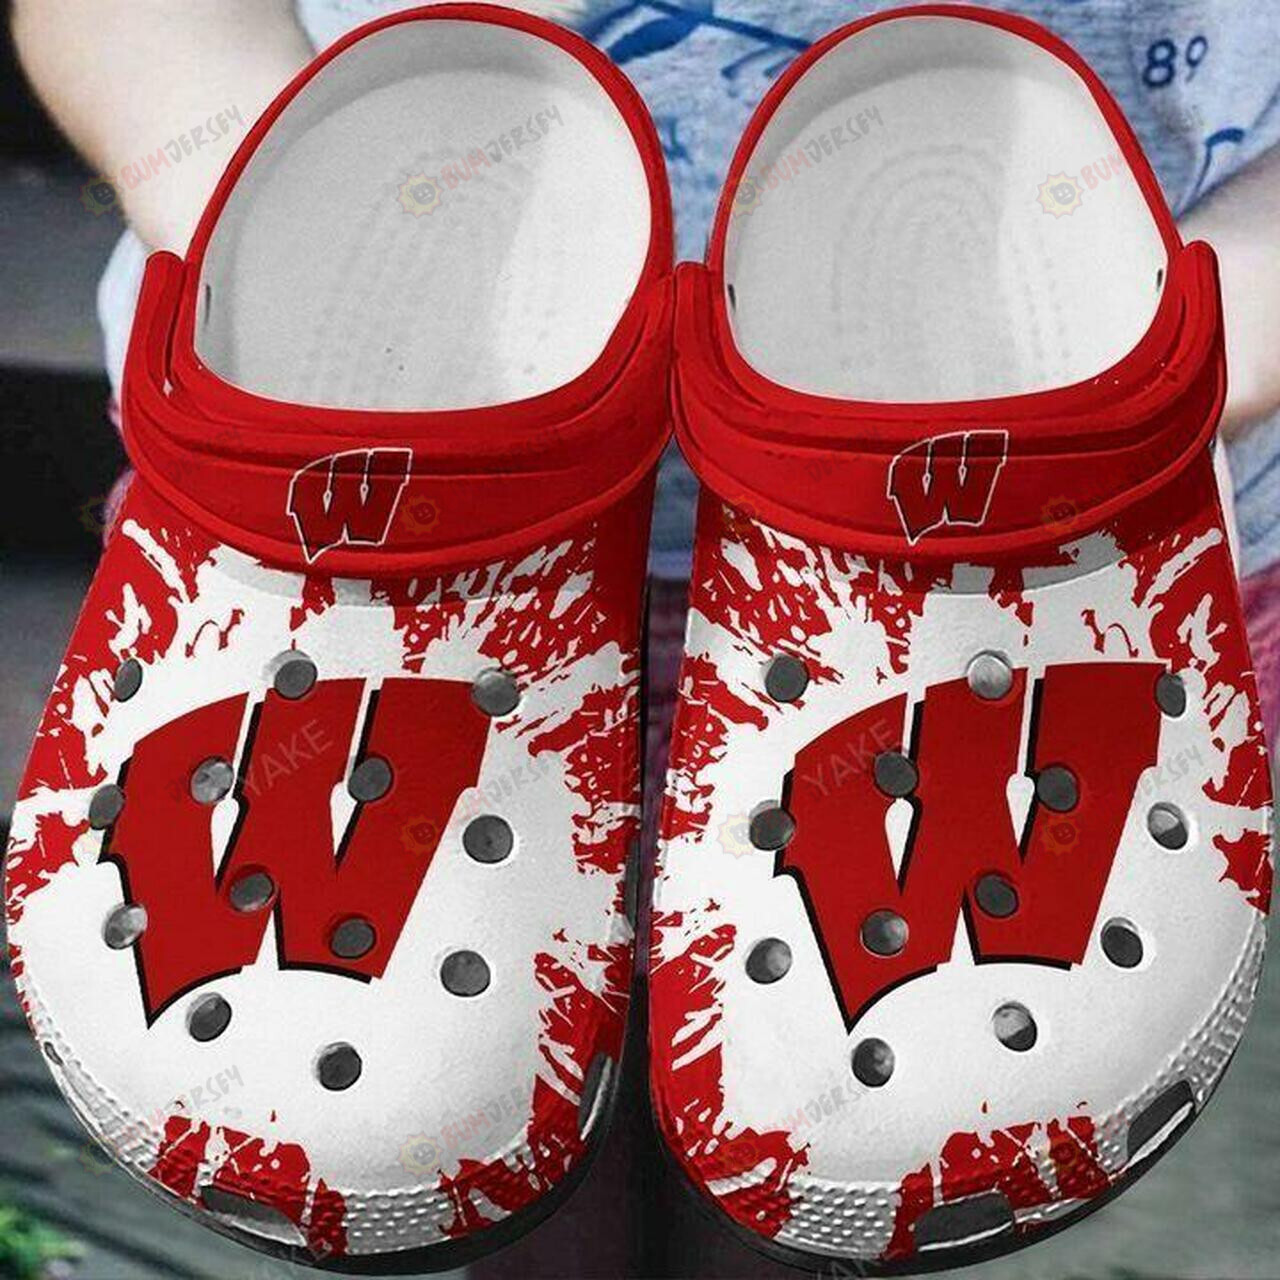 Wisconsin Badgers Crocs Crocband Clog Comfortable Water Shoes